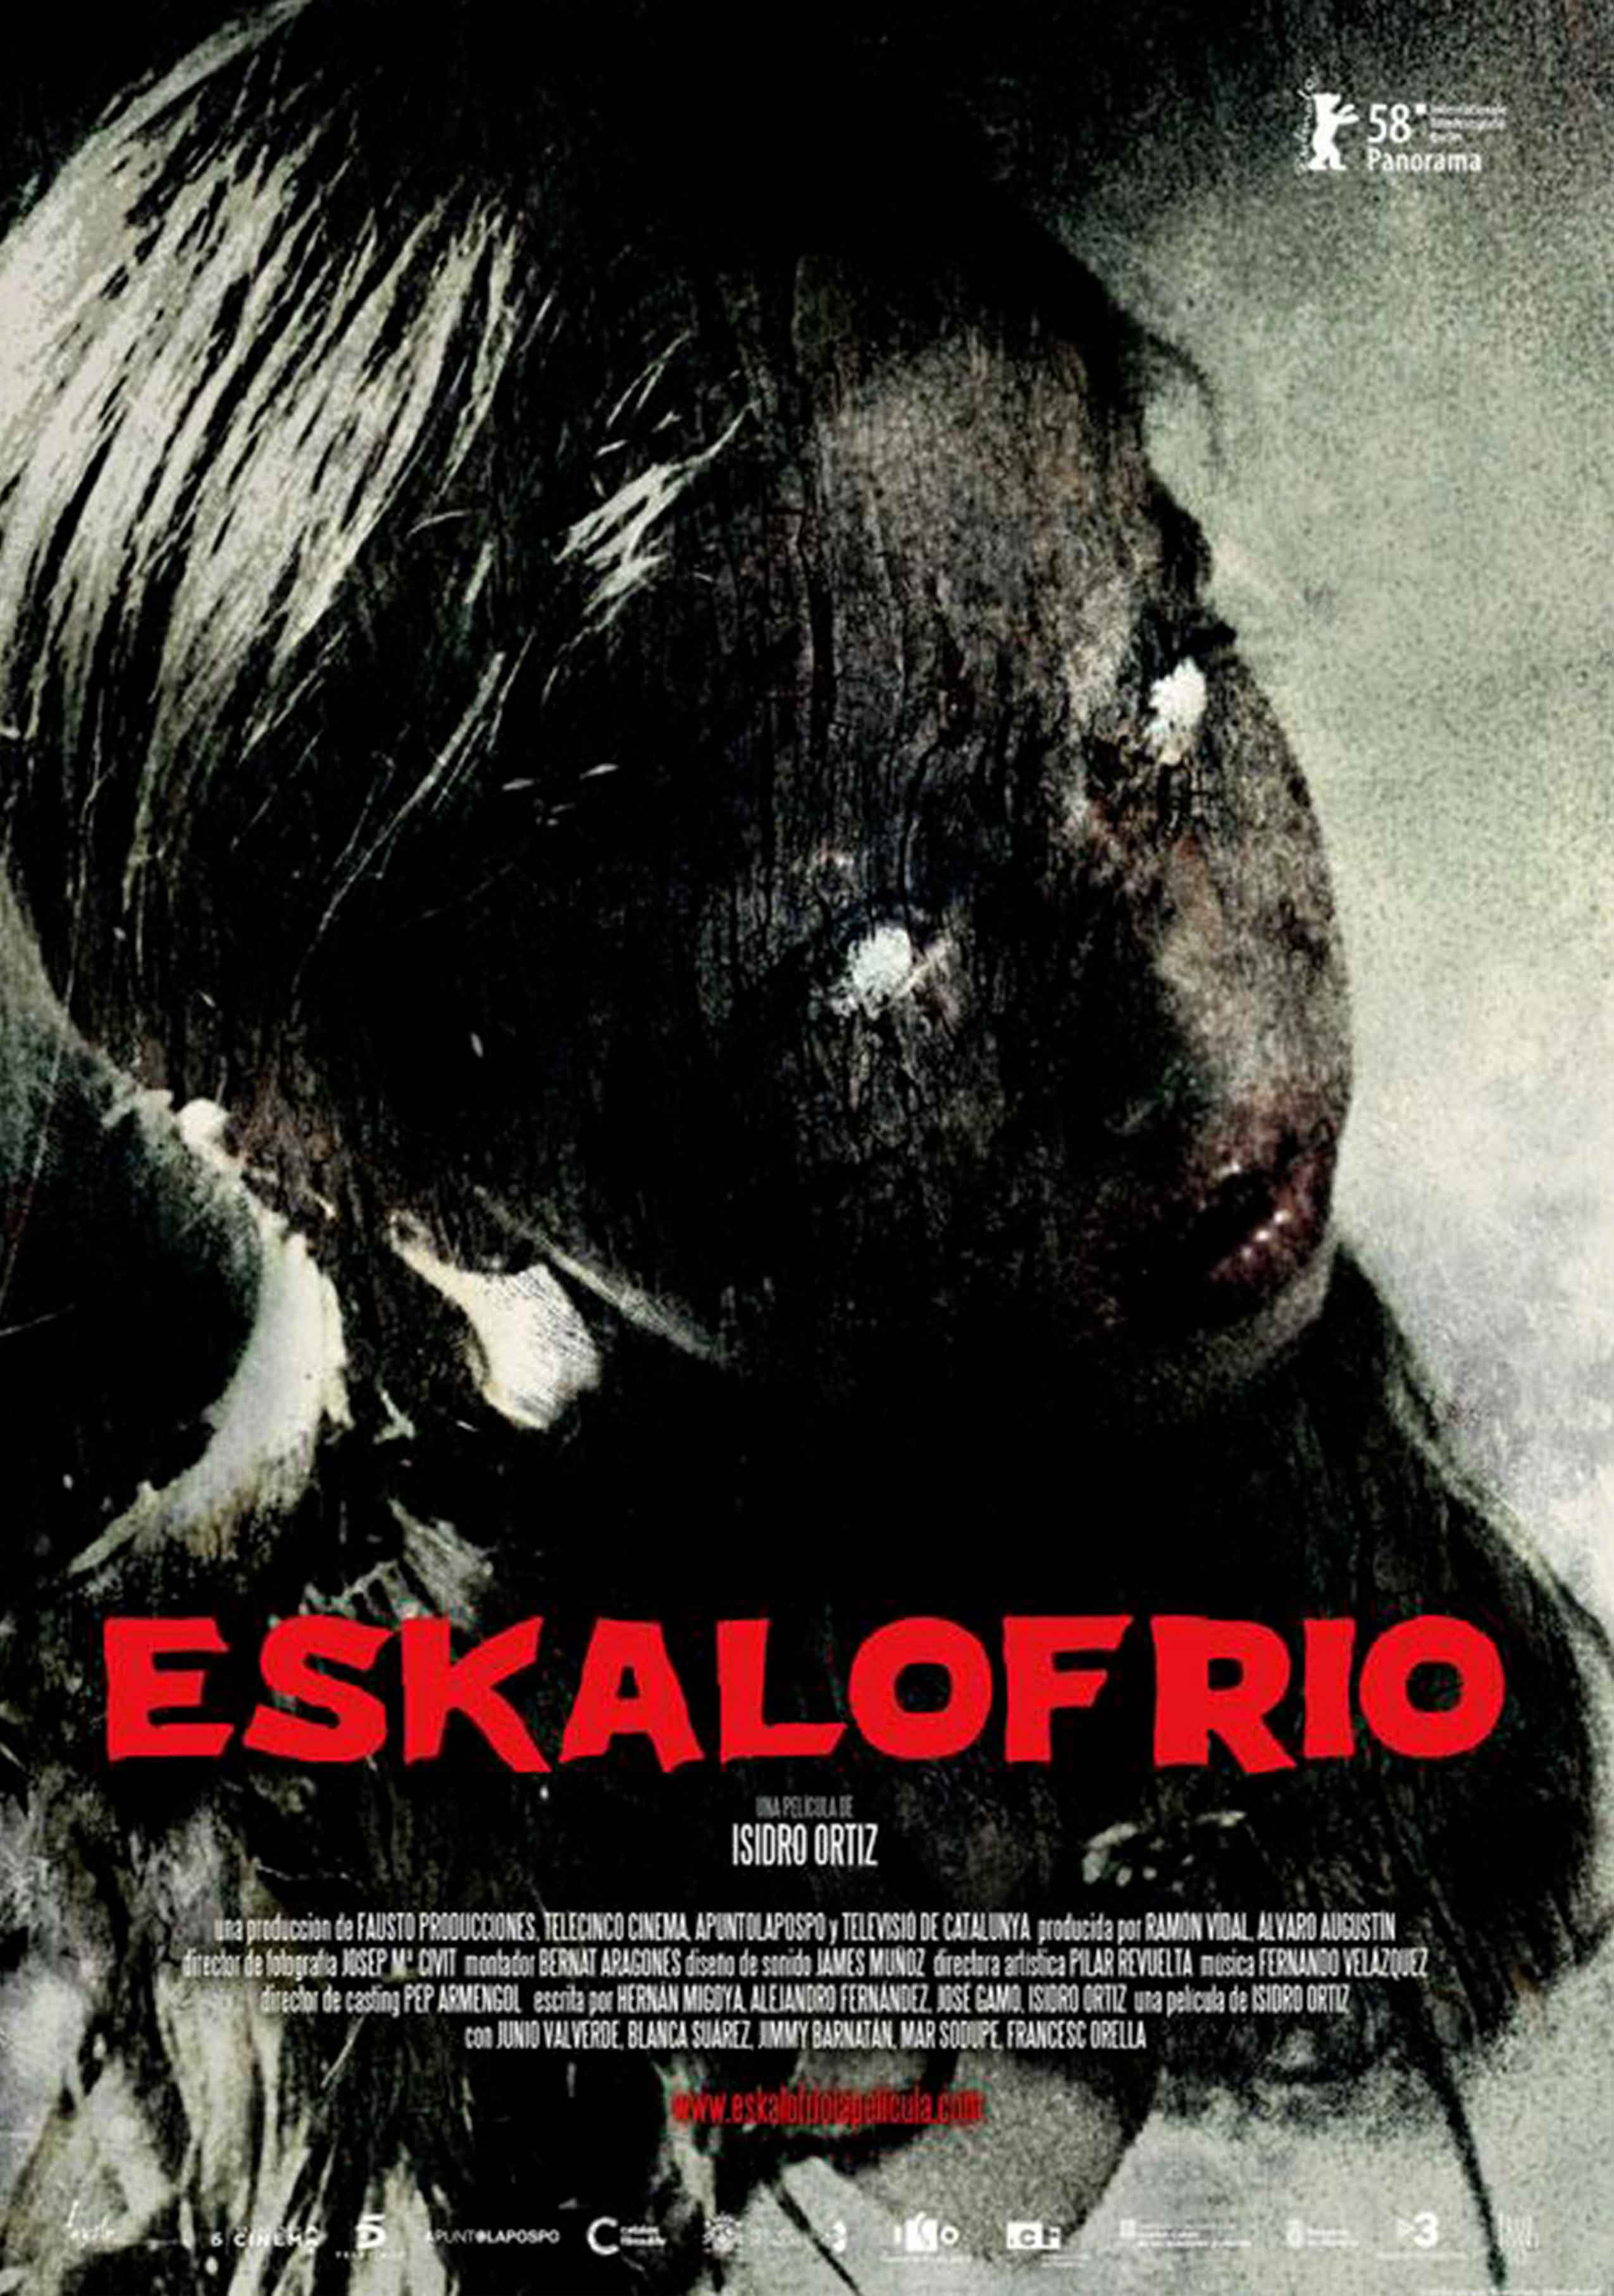 Eskalofrío (2008) Screenshot 3 